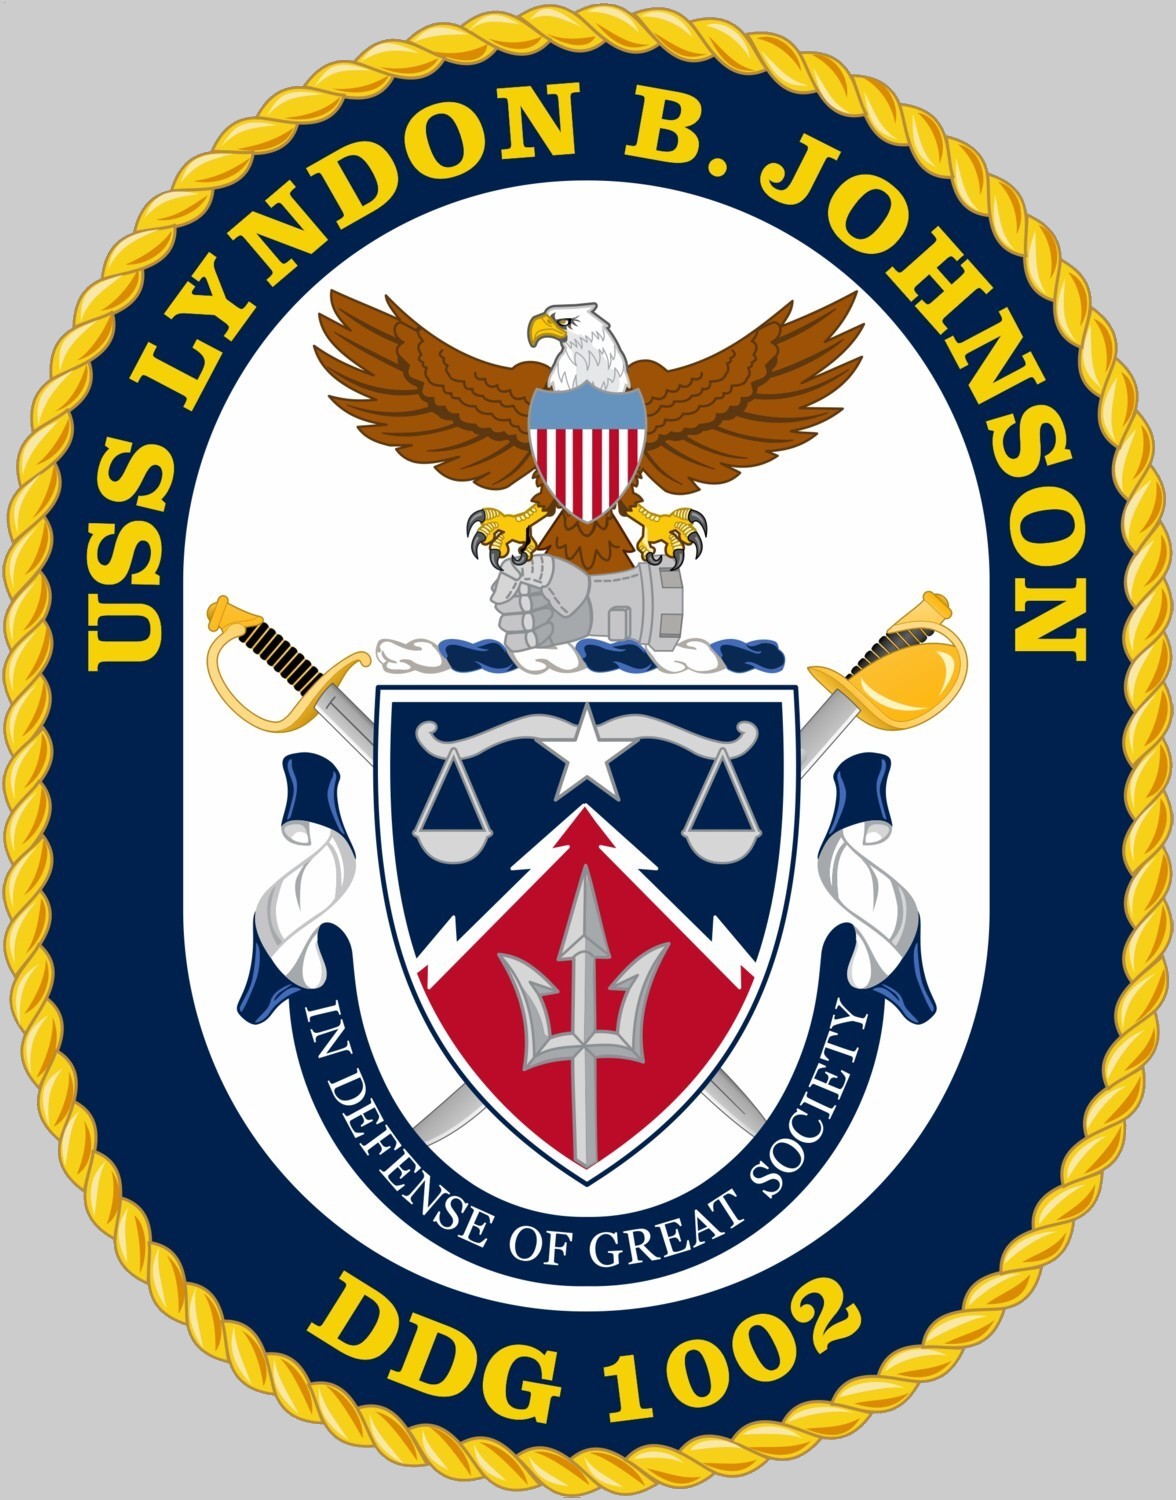 ddg-1002 uss lyndon b. johnson insignia crest patch badge zumwalt class guided missile destroyer 02x